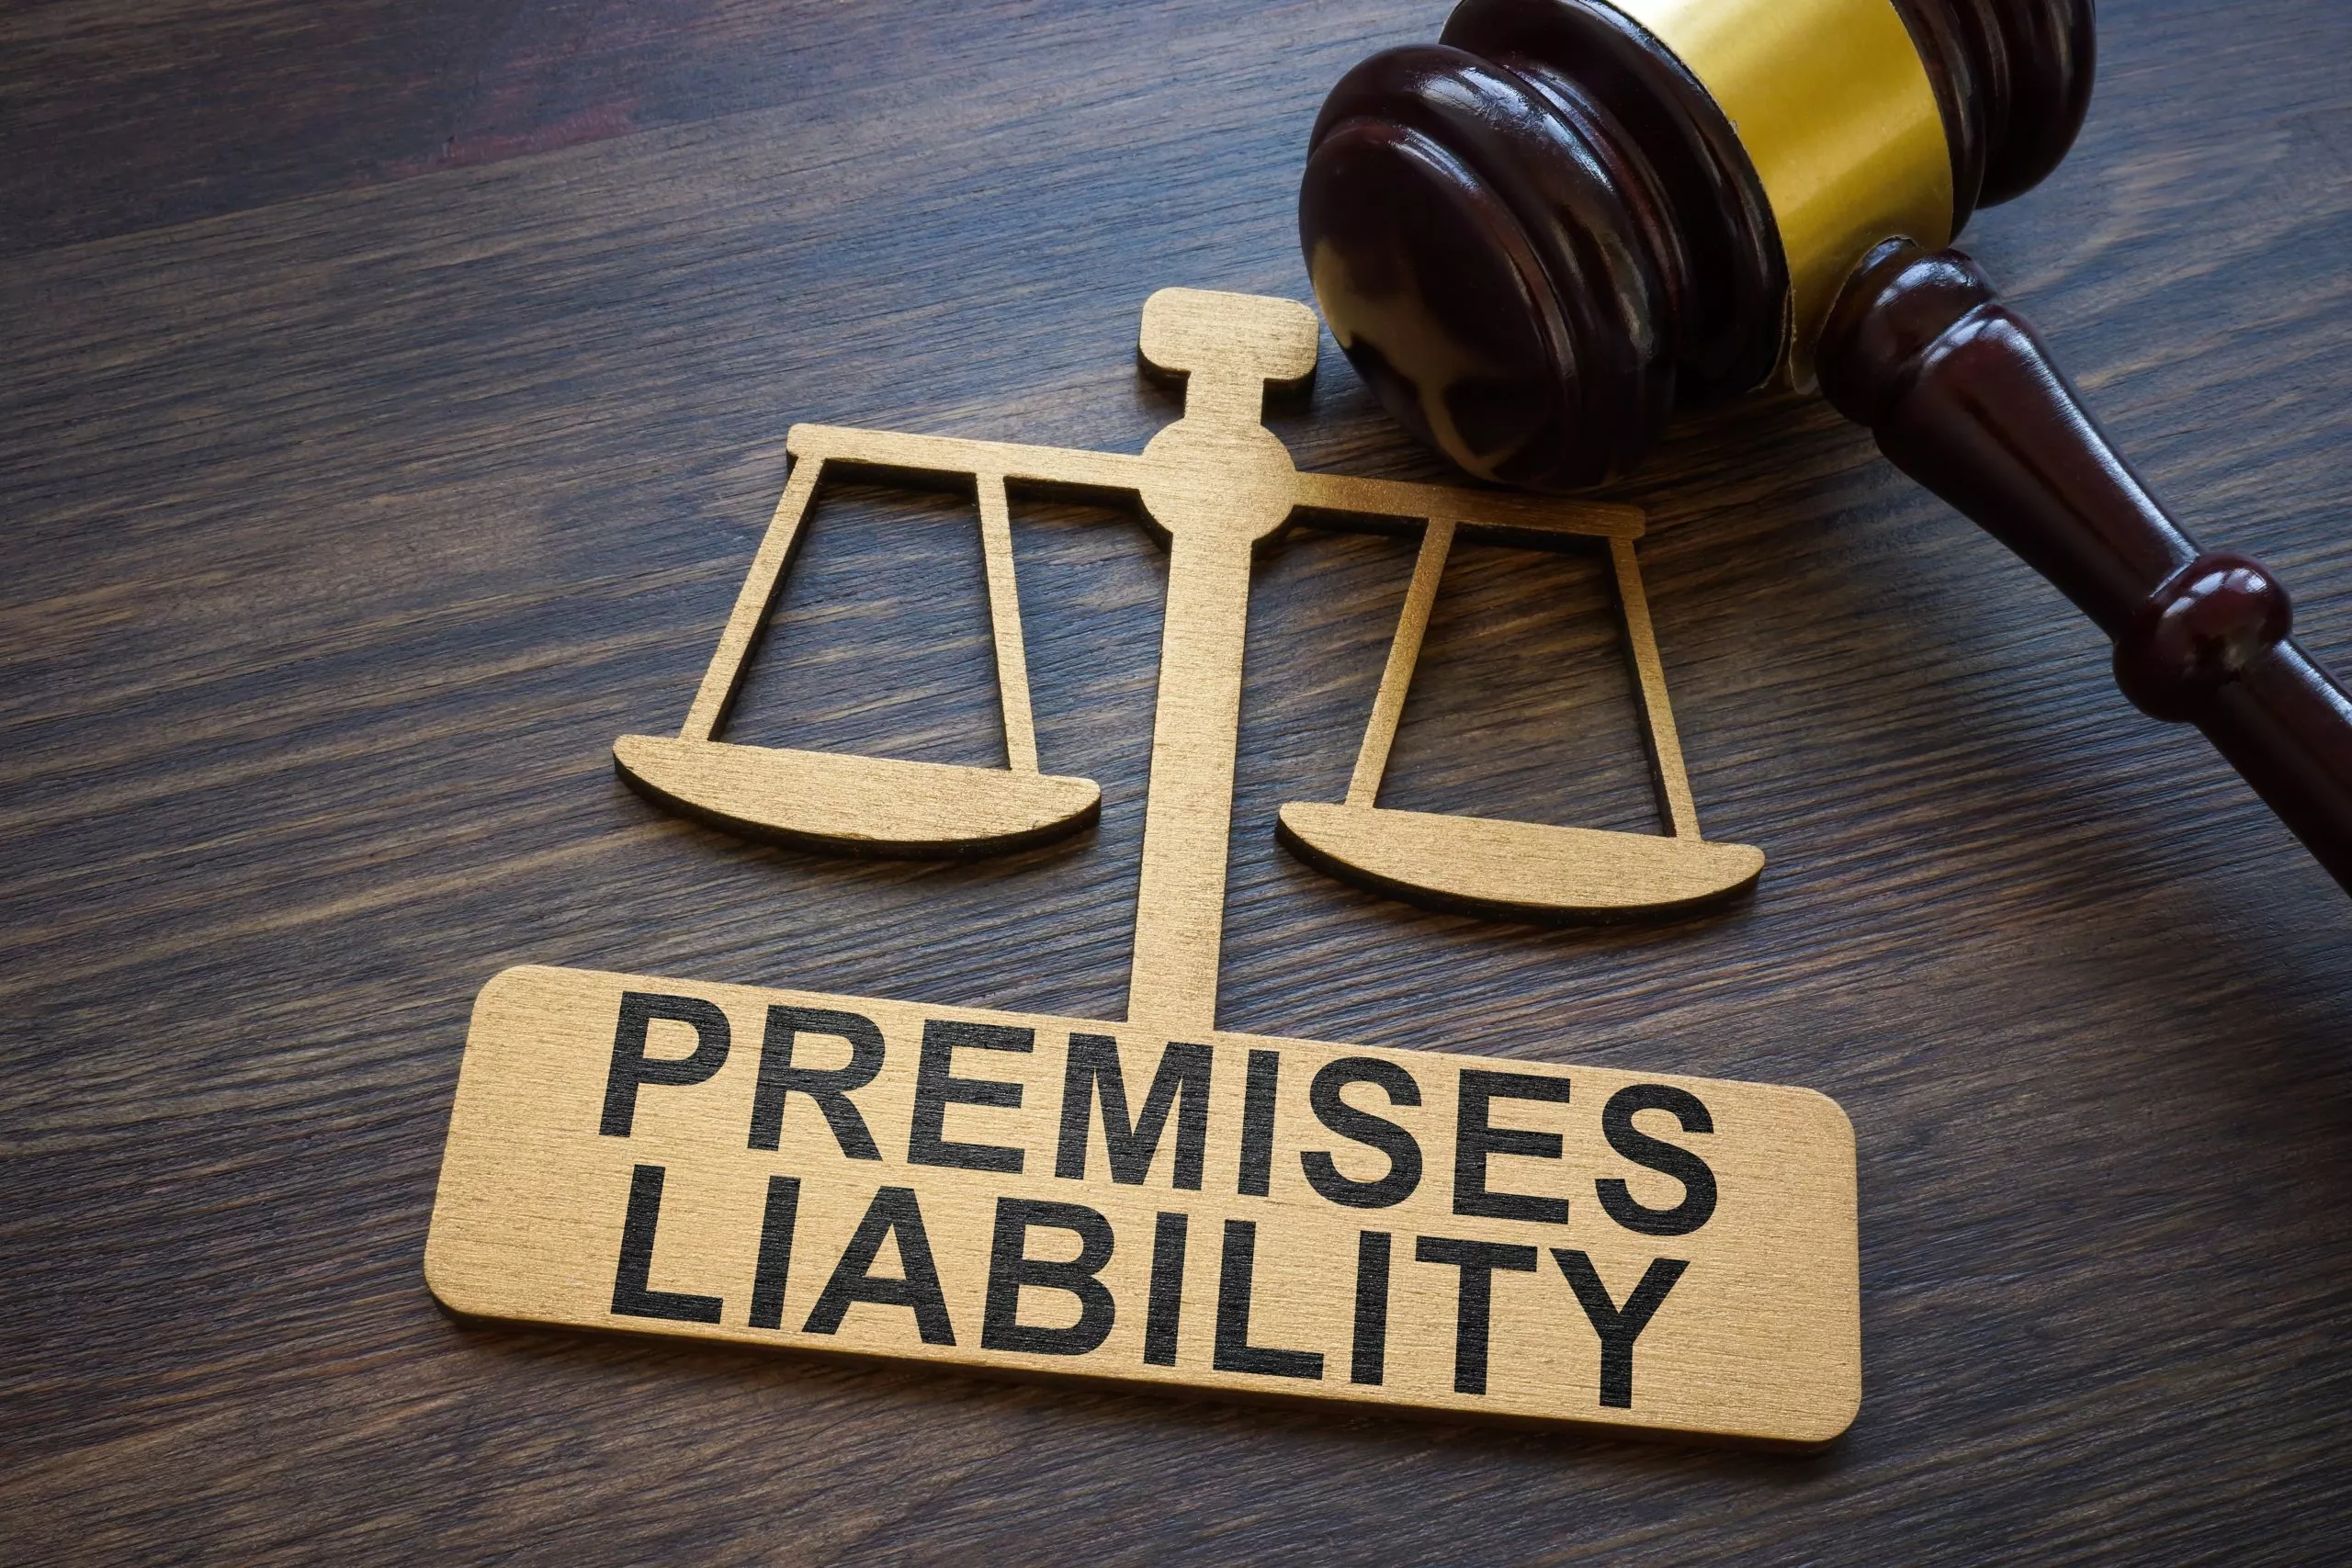 Premises Liability attorneys